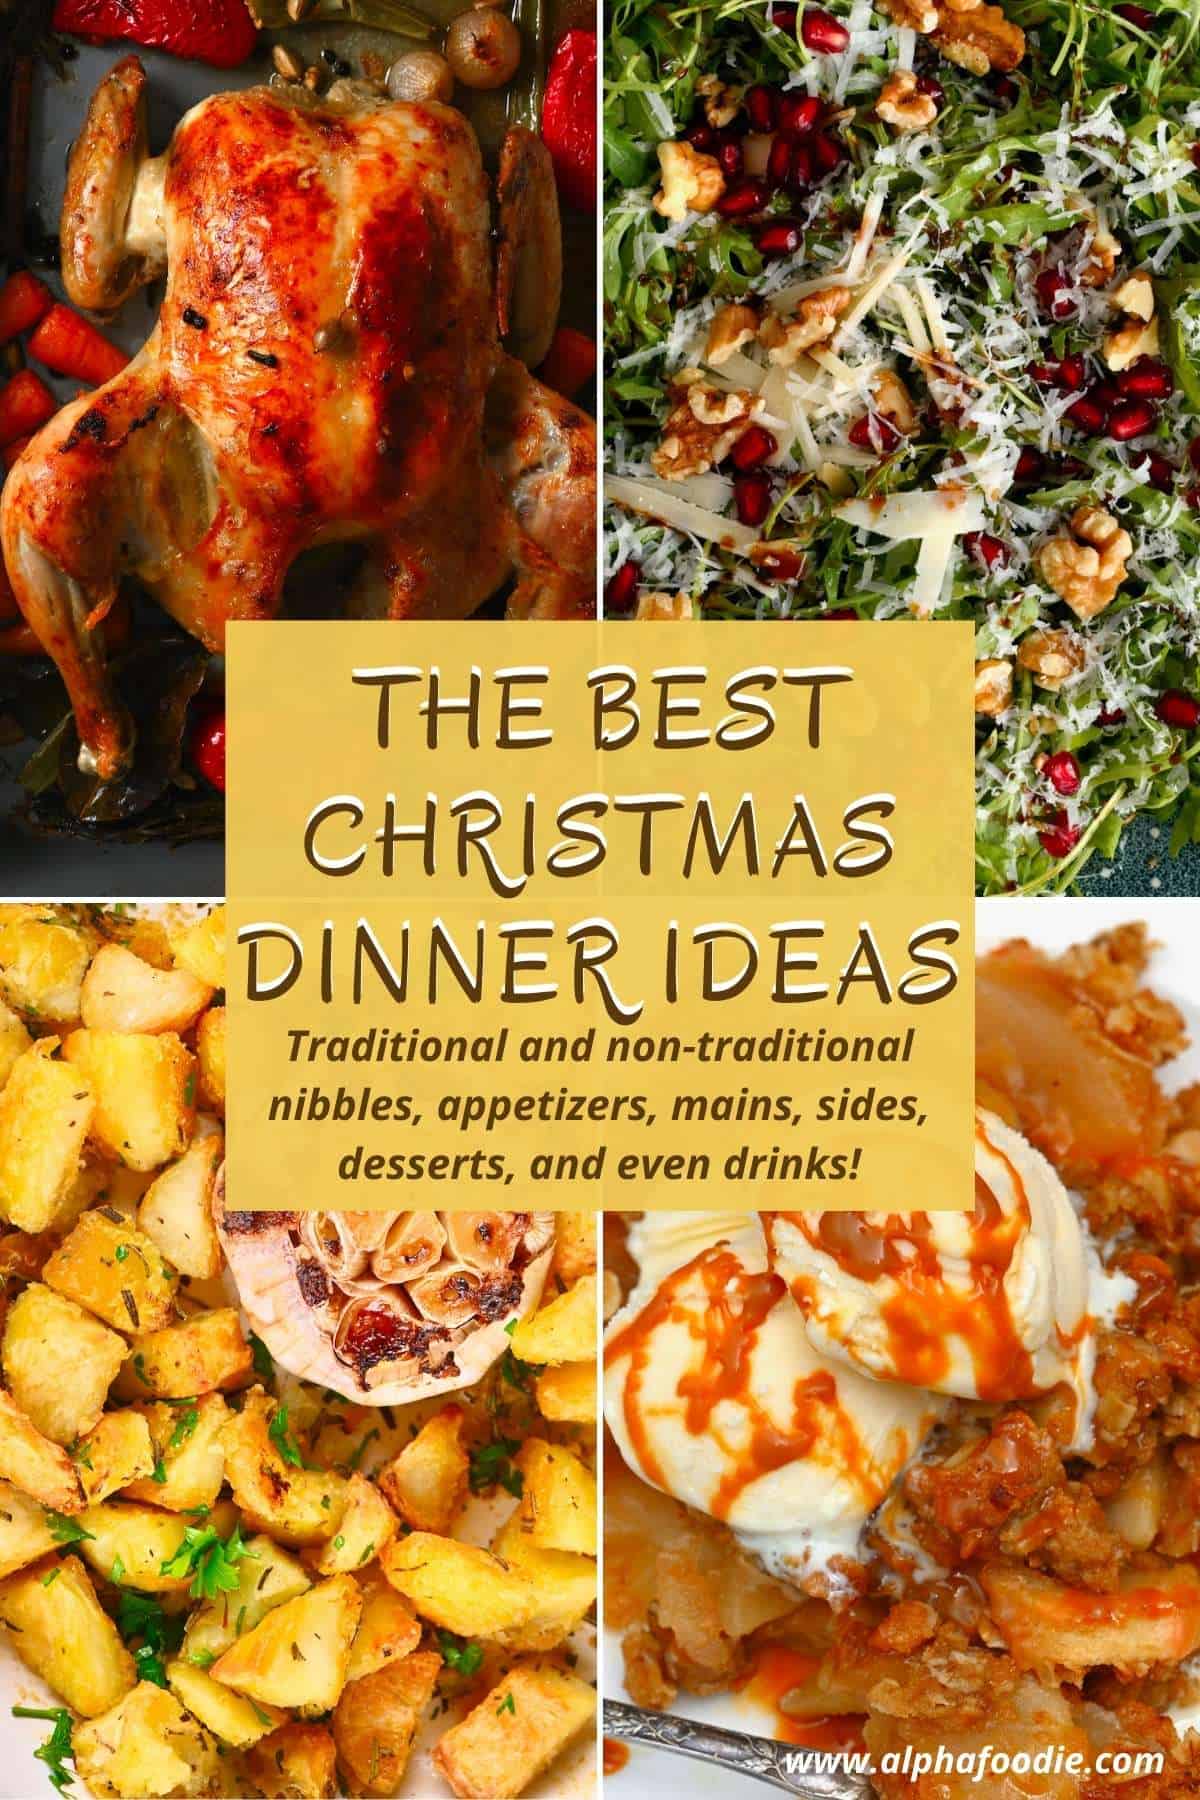 55+ Best Christmas Dinner Ideas To Impress - Alphafoodie